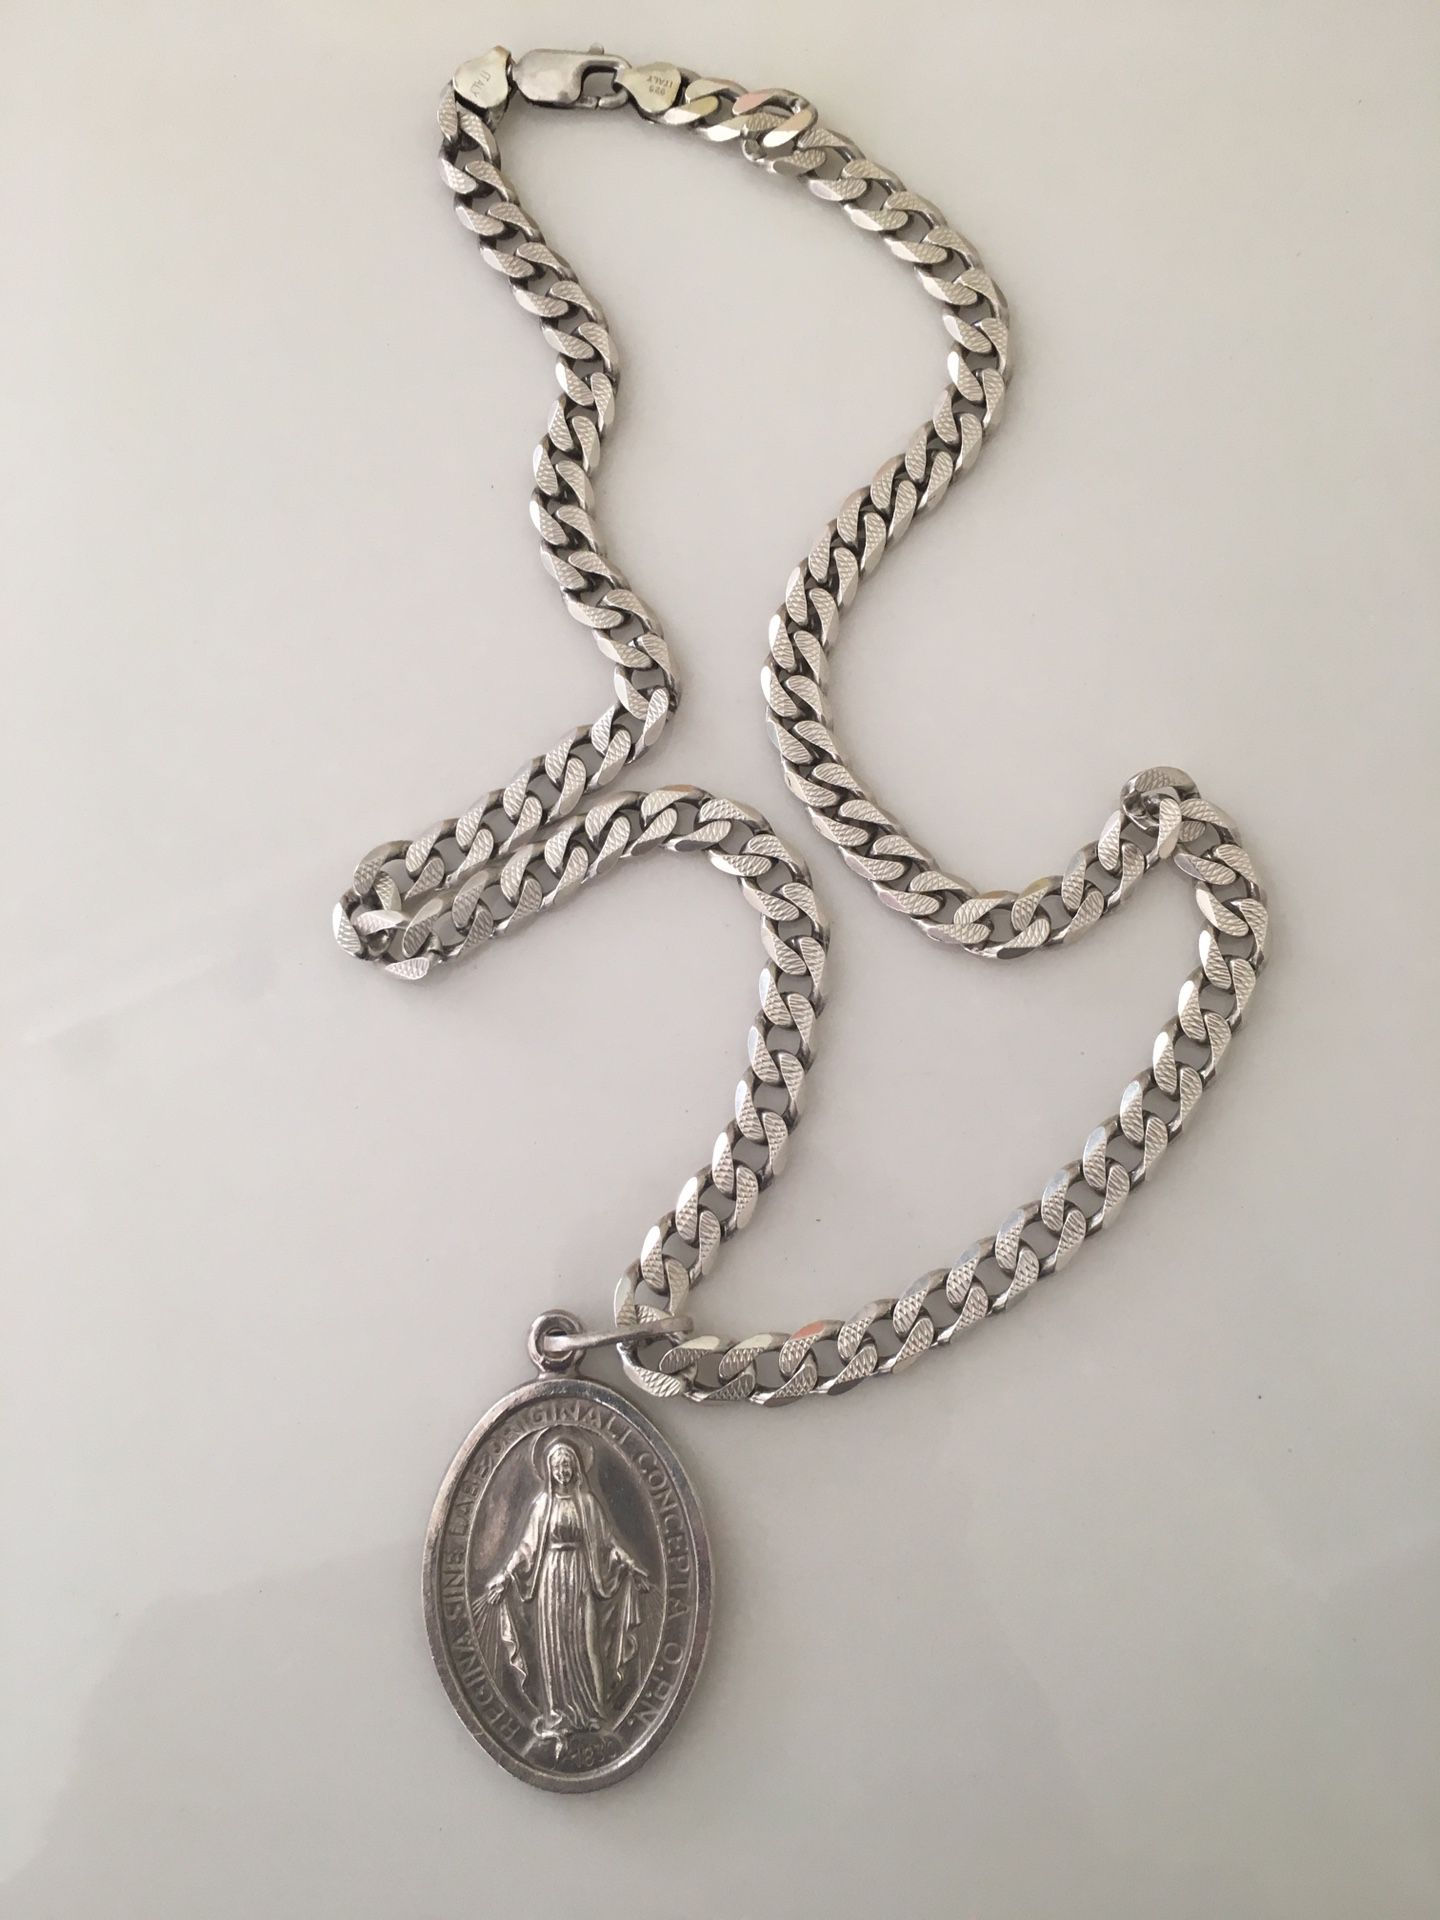 Neckelece with pendant Italy 925 Silver